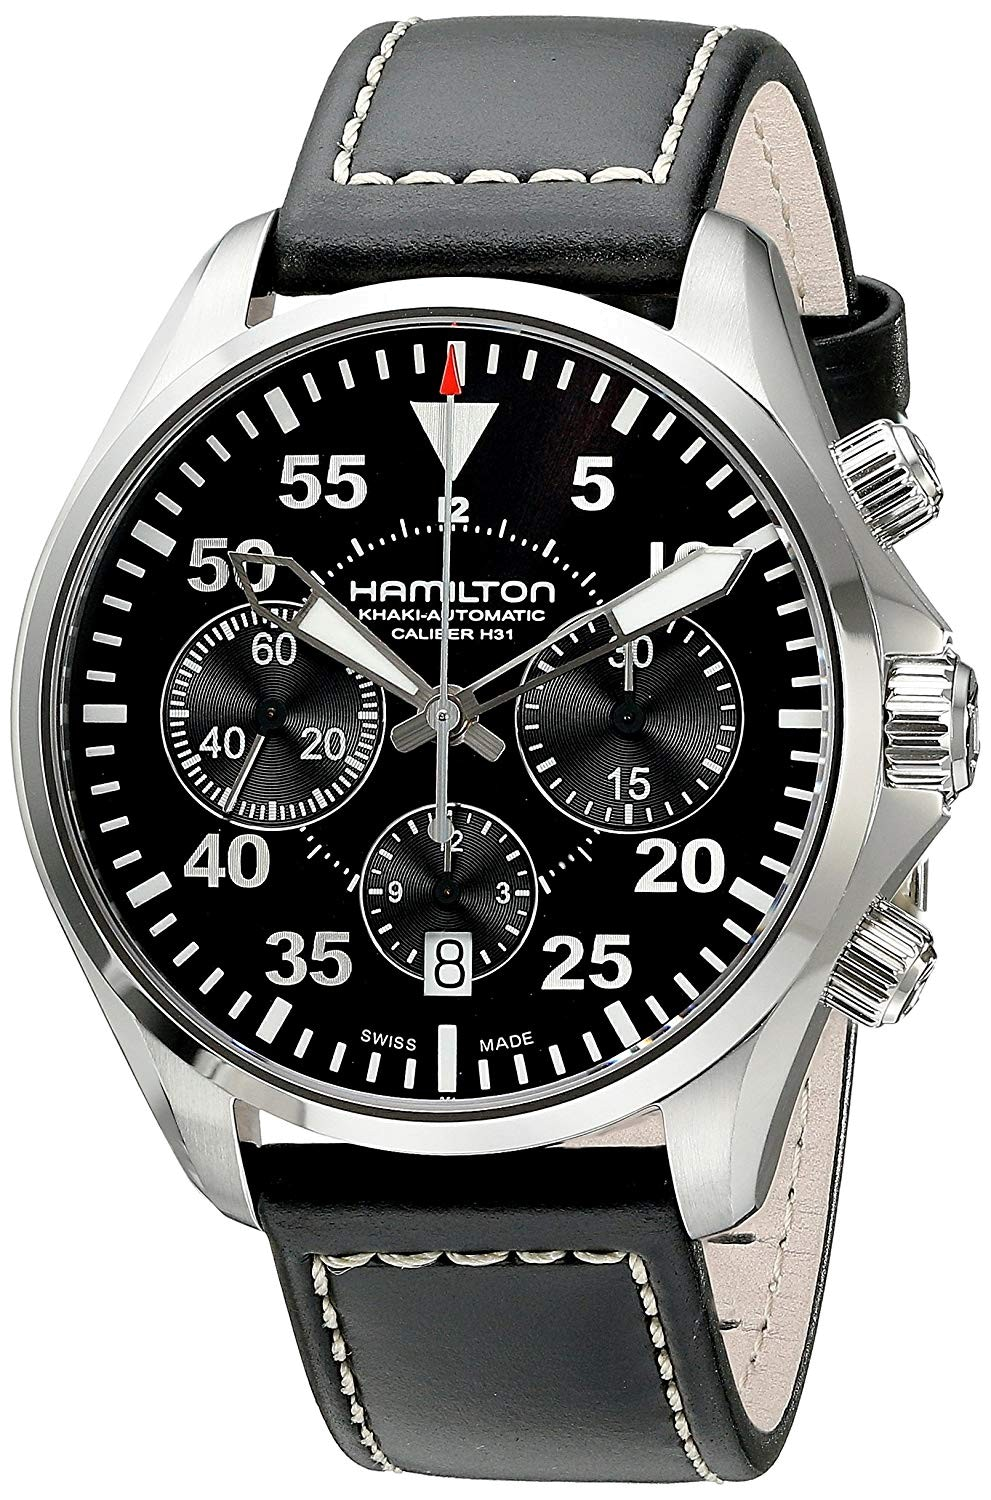 Hamilton watch. Часы Гамильтон хаки Авиатион. Часы Hamilton Khaki Aviation h76655733. Часы Hamilton h71706830. Наручные часы Hamilton Khaki Aviation.